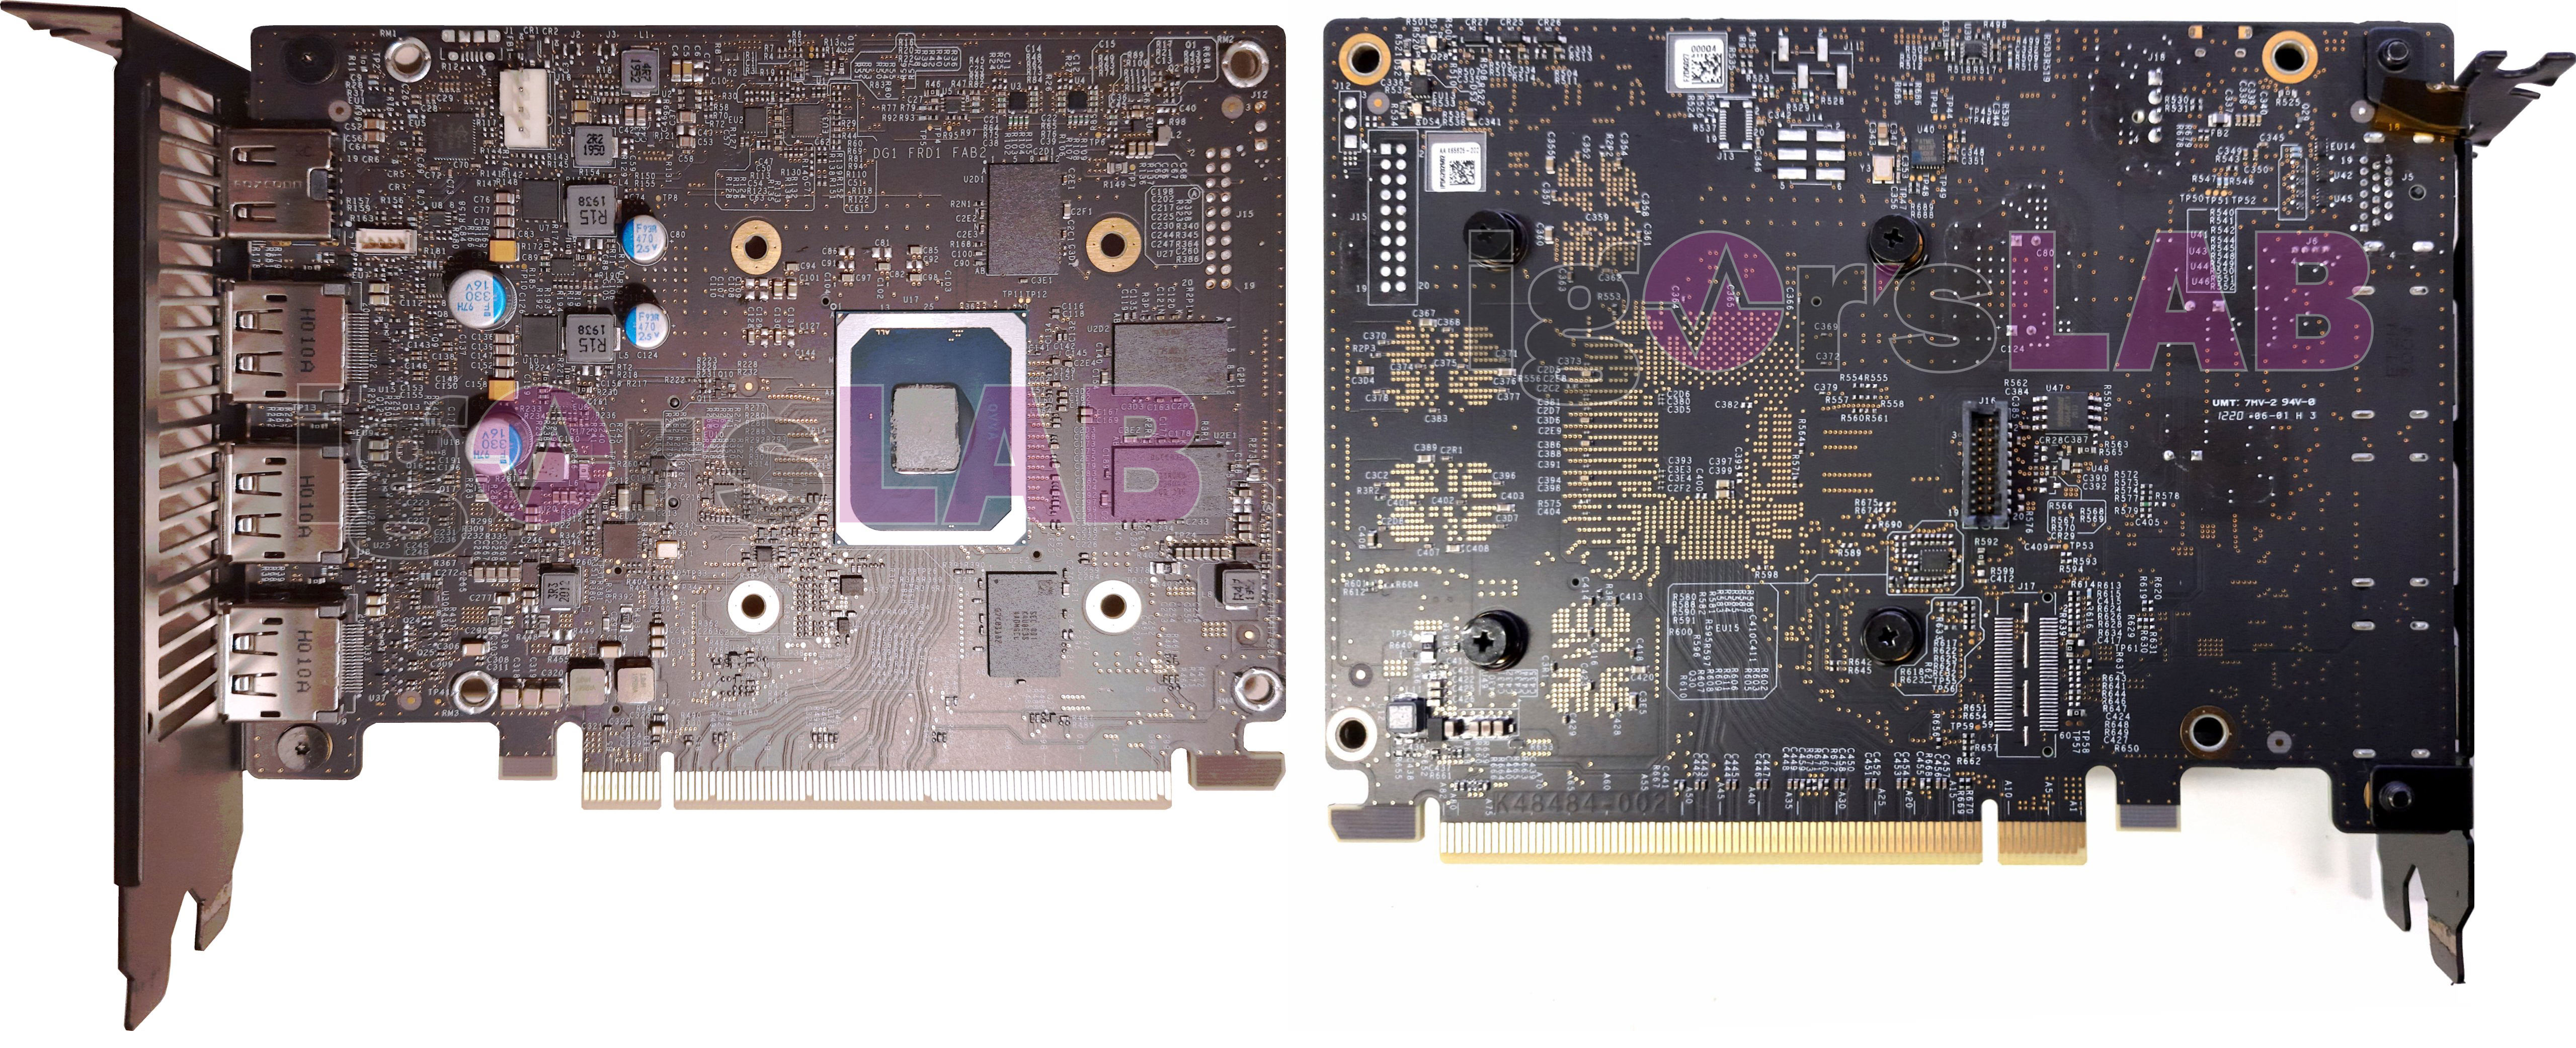 برد مدار چاپی یا PCB کارت گرافیک Intel DG1 ایگور لب